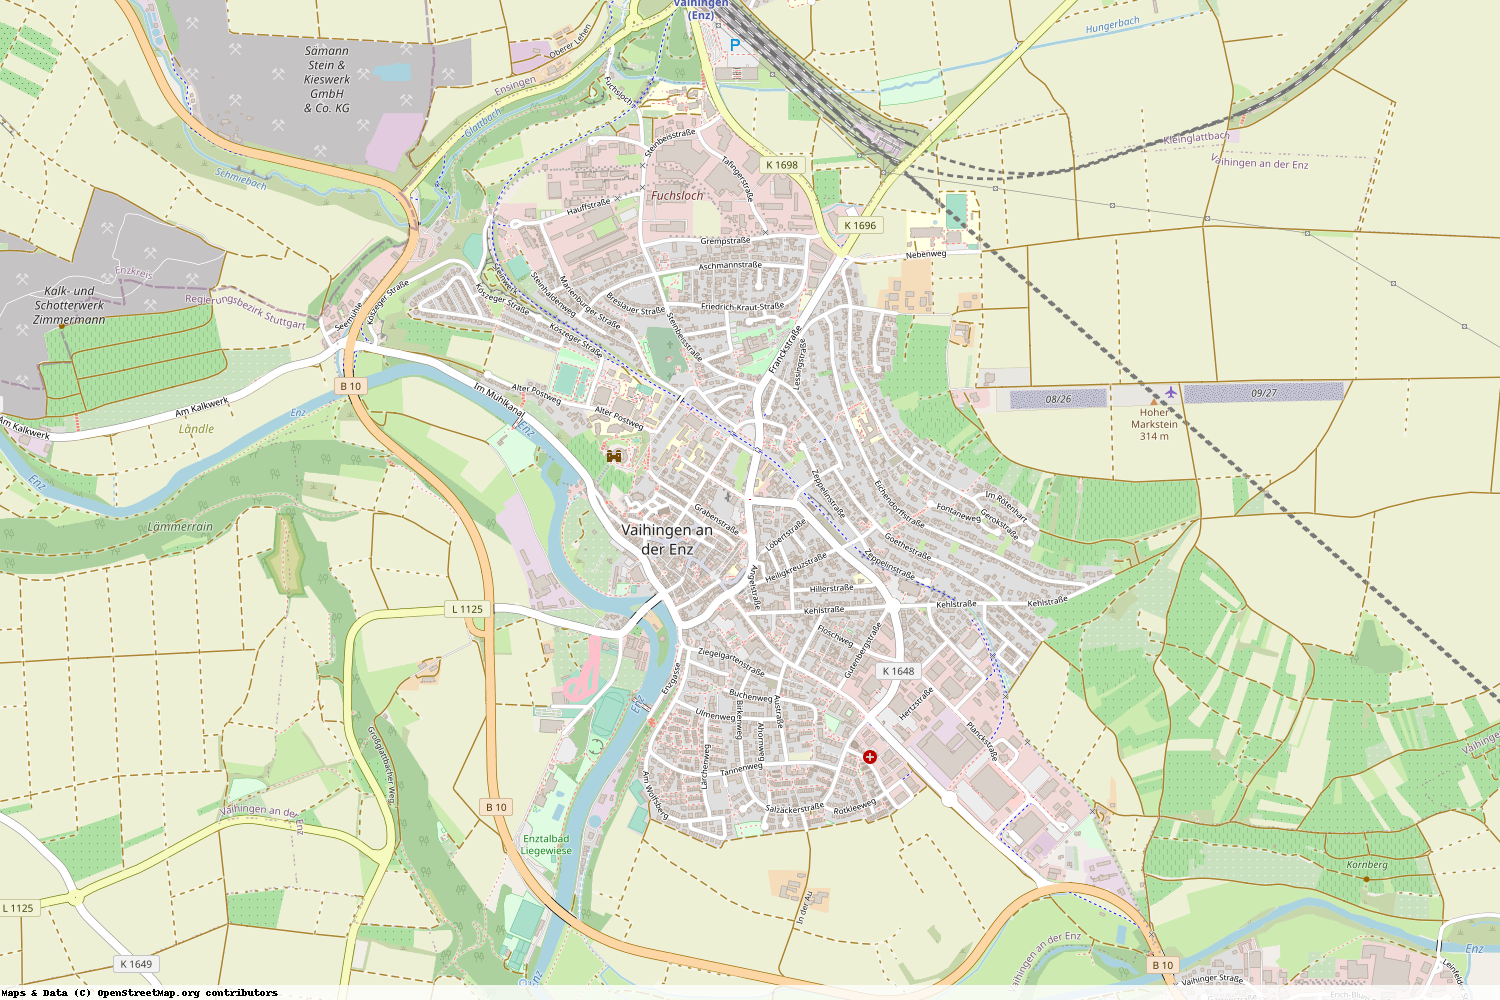 Ist gerade Stromausfall in Baden-Württemberg - Ludwigsburg - Vaihingen an der Enz?